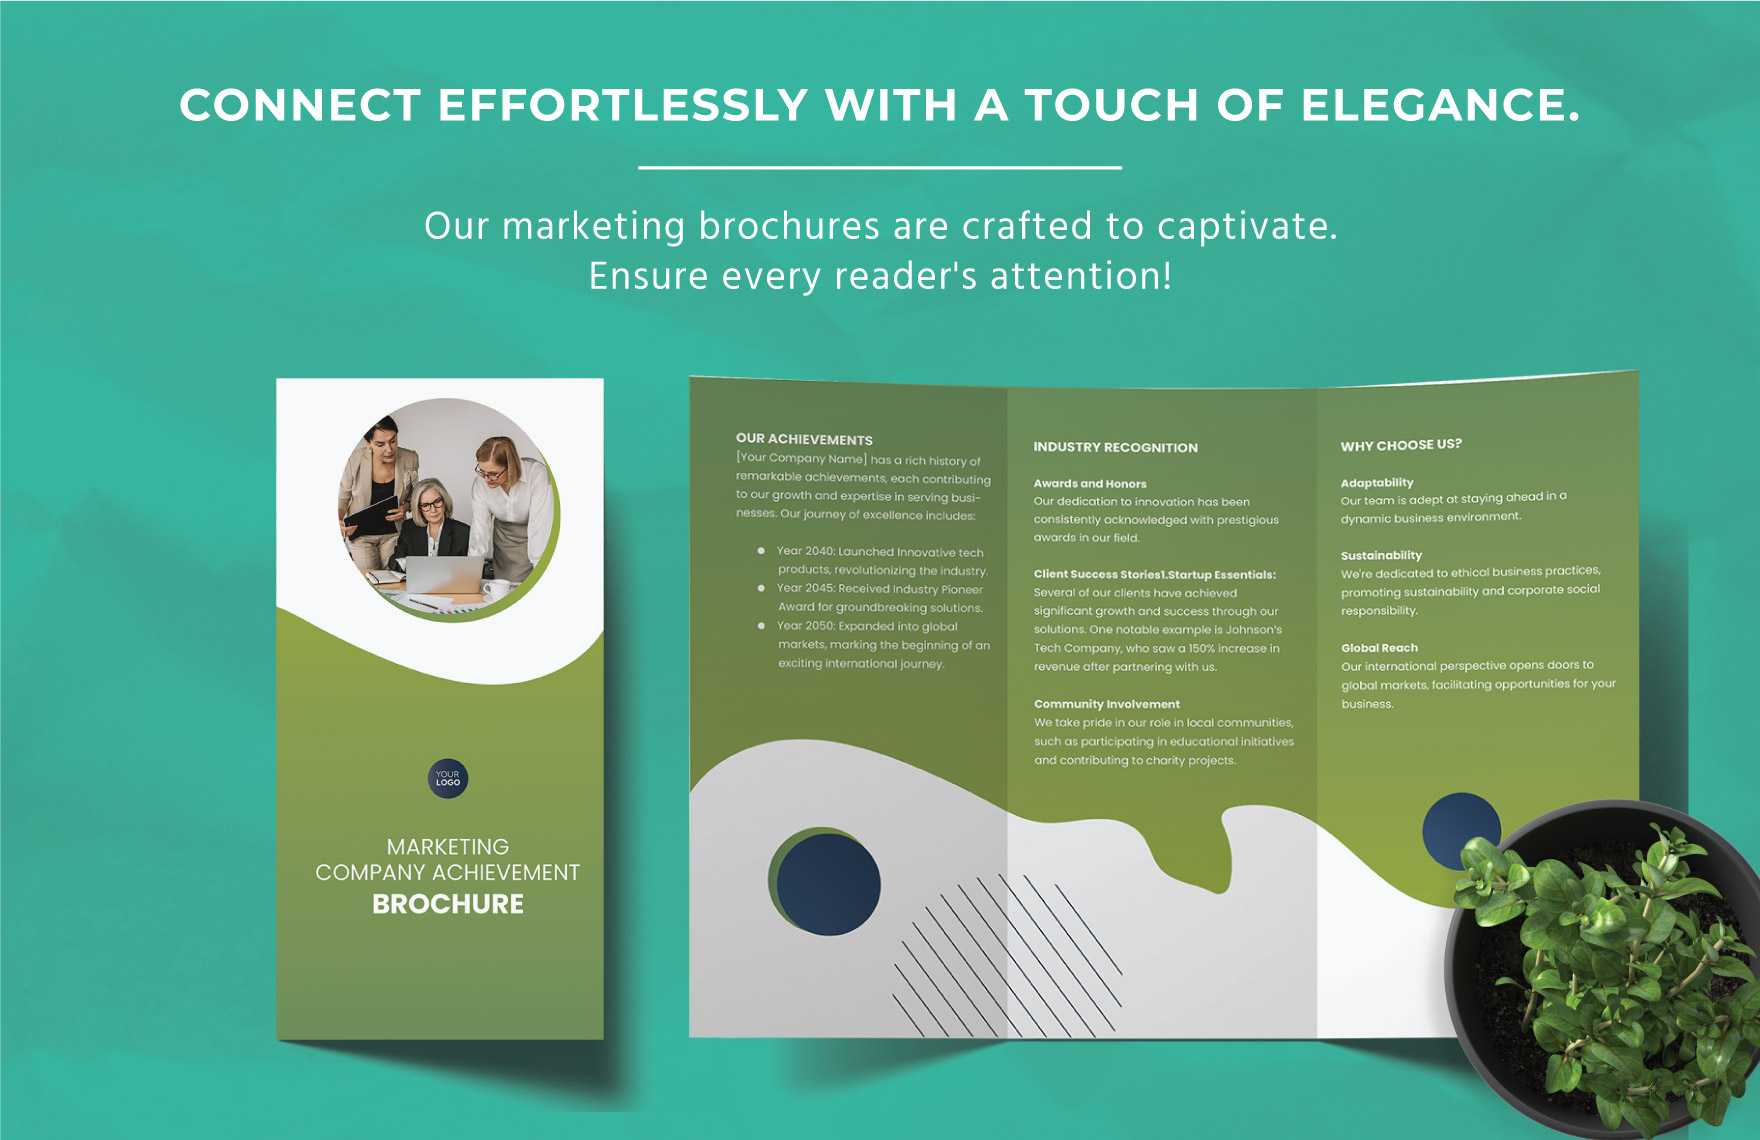 Marketing Company Achievements Brochure Template